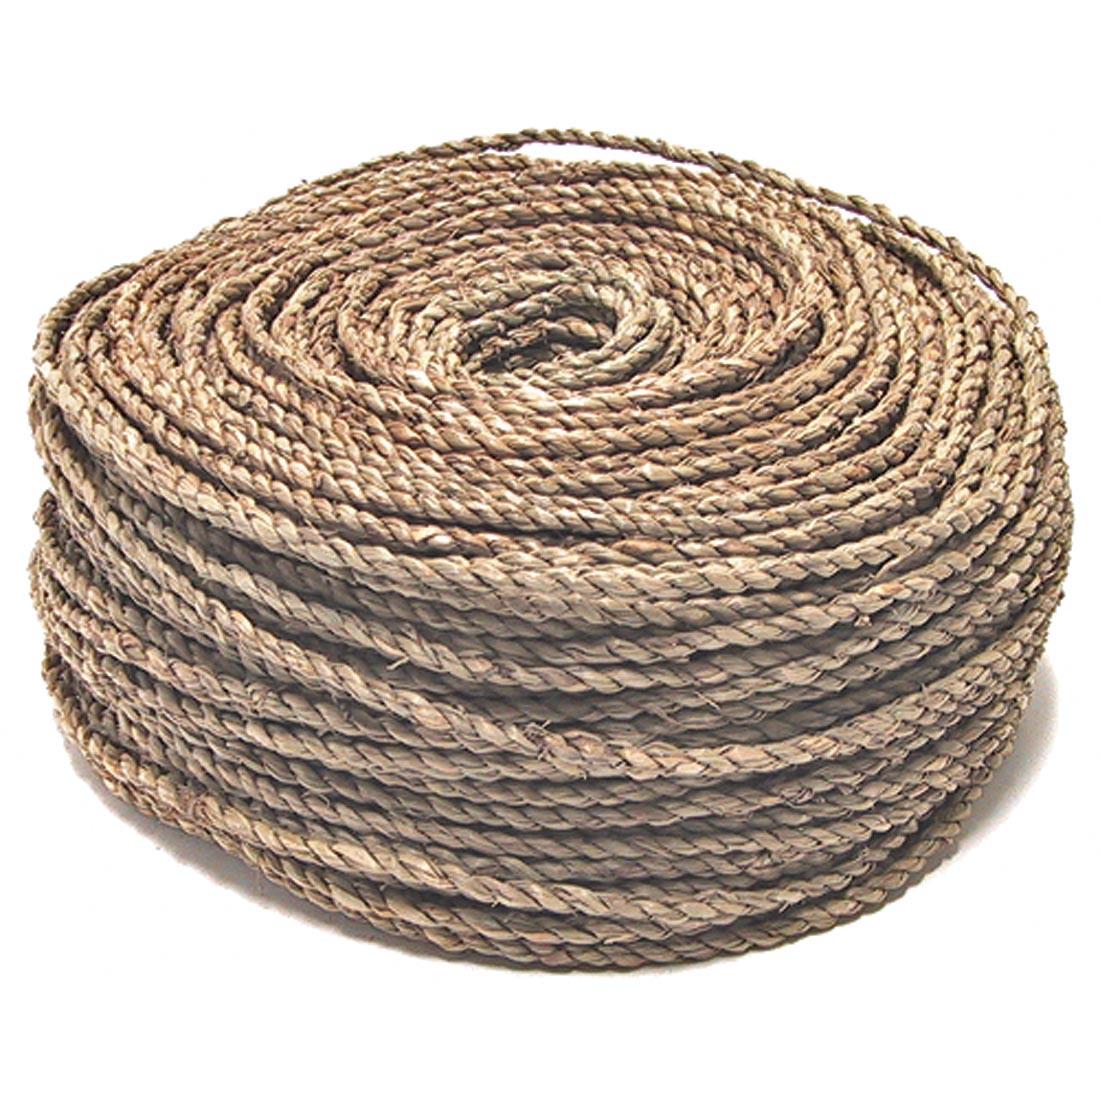 Sea Grass Rope